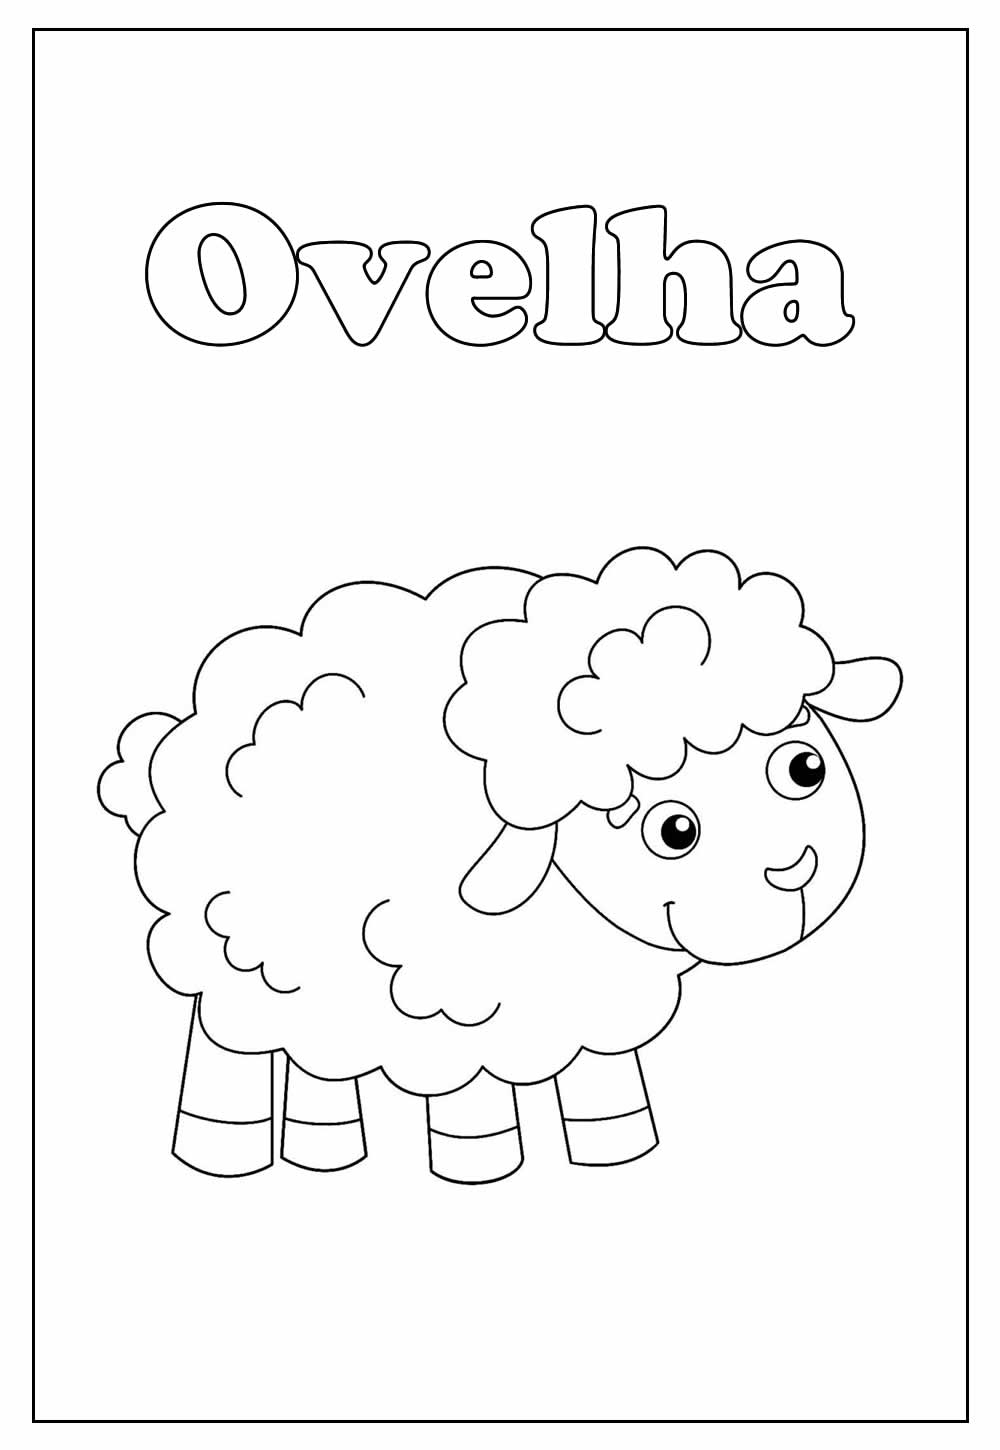 Desenho de Ovelha